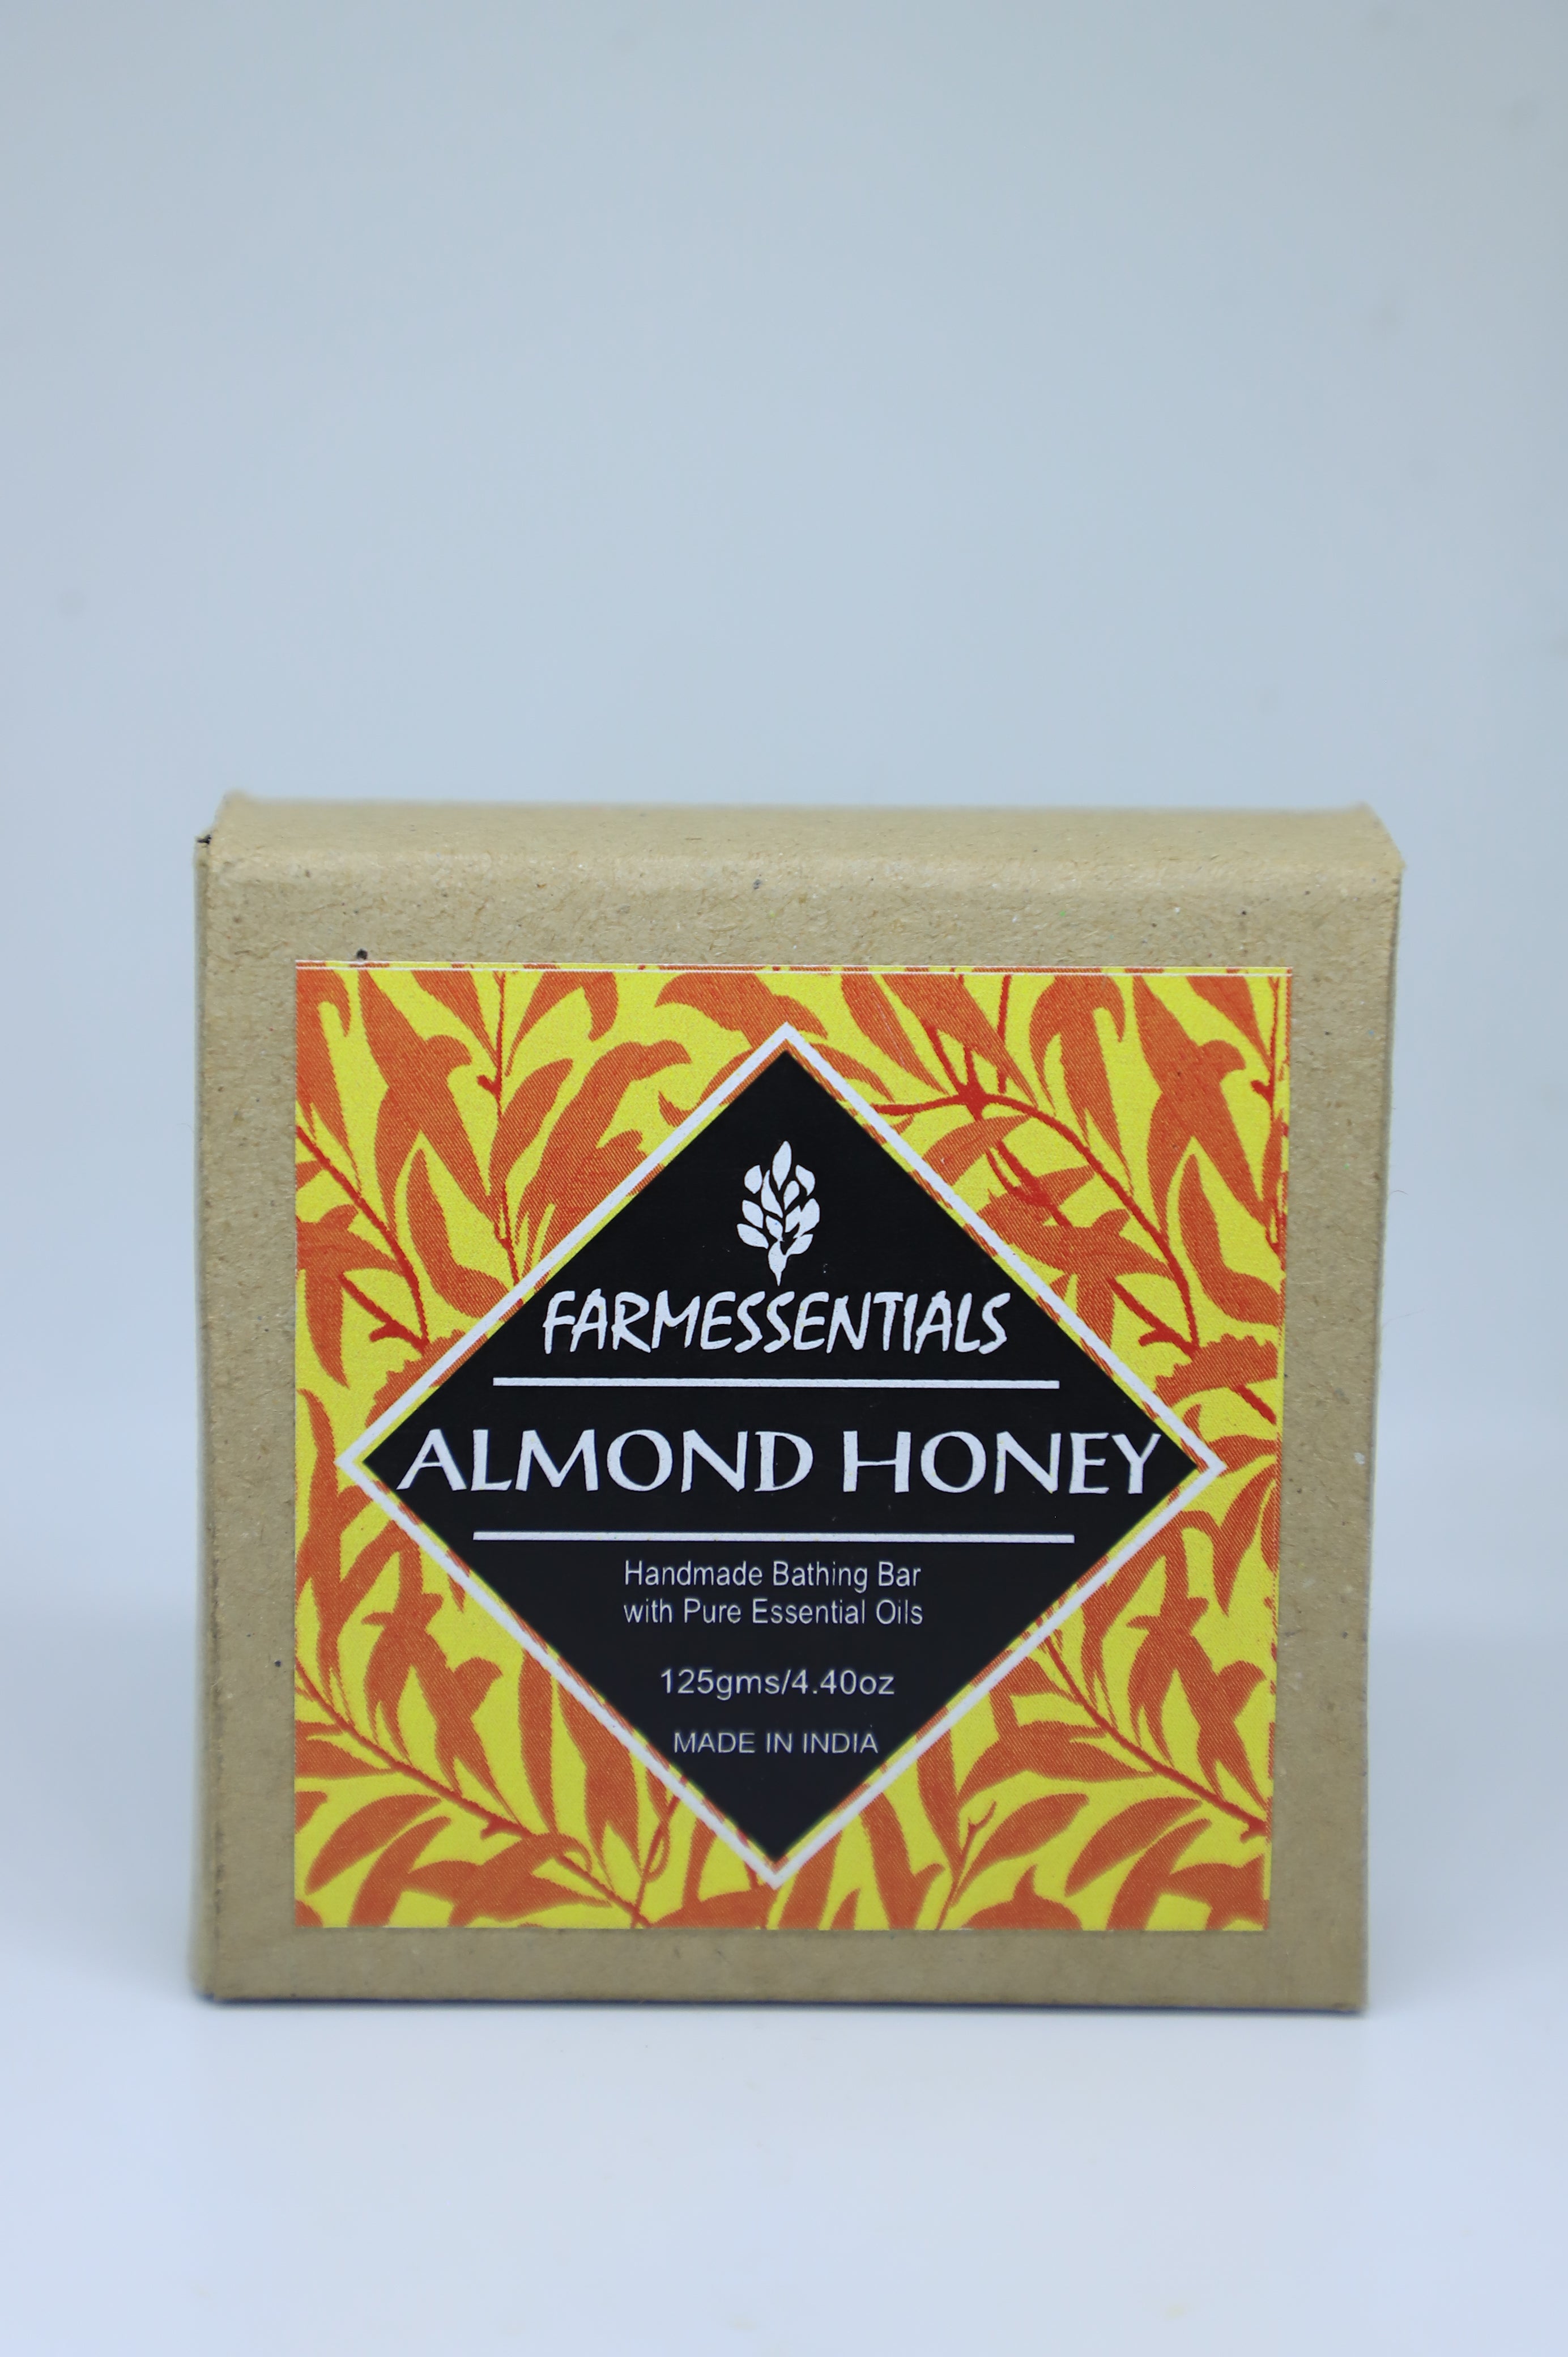 Almond Honey